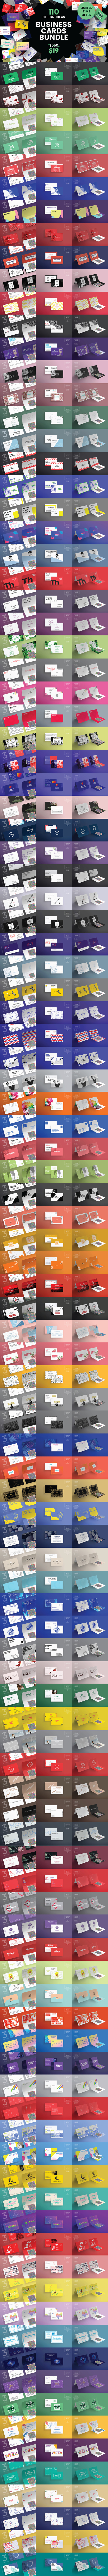 110-business-cards-bundle-collage.jpg